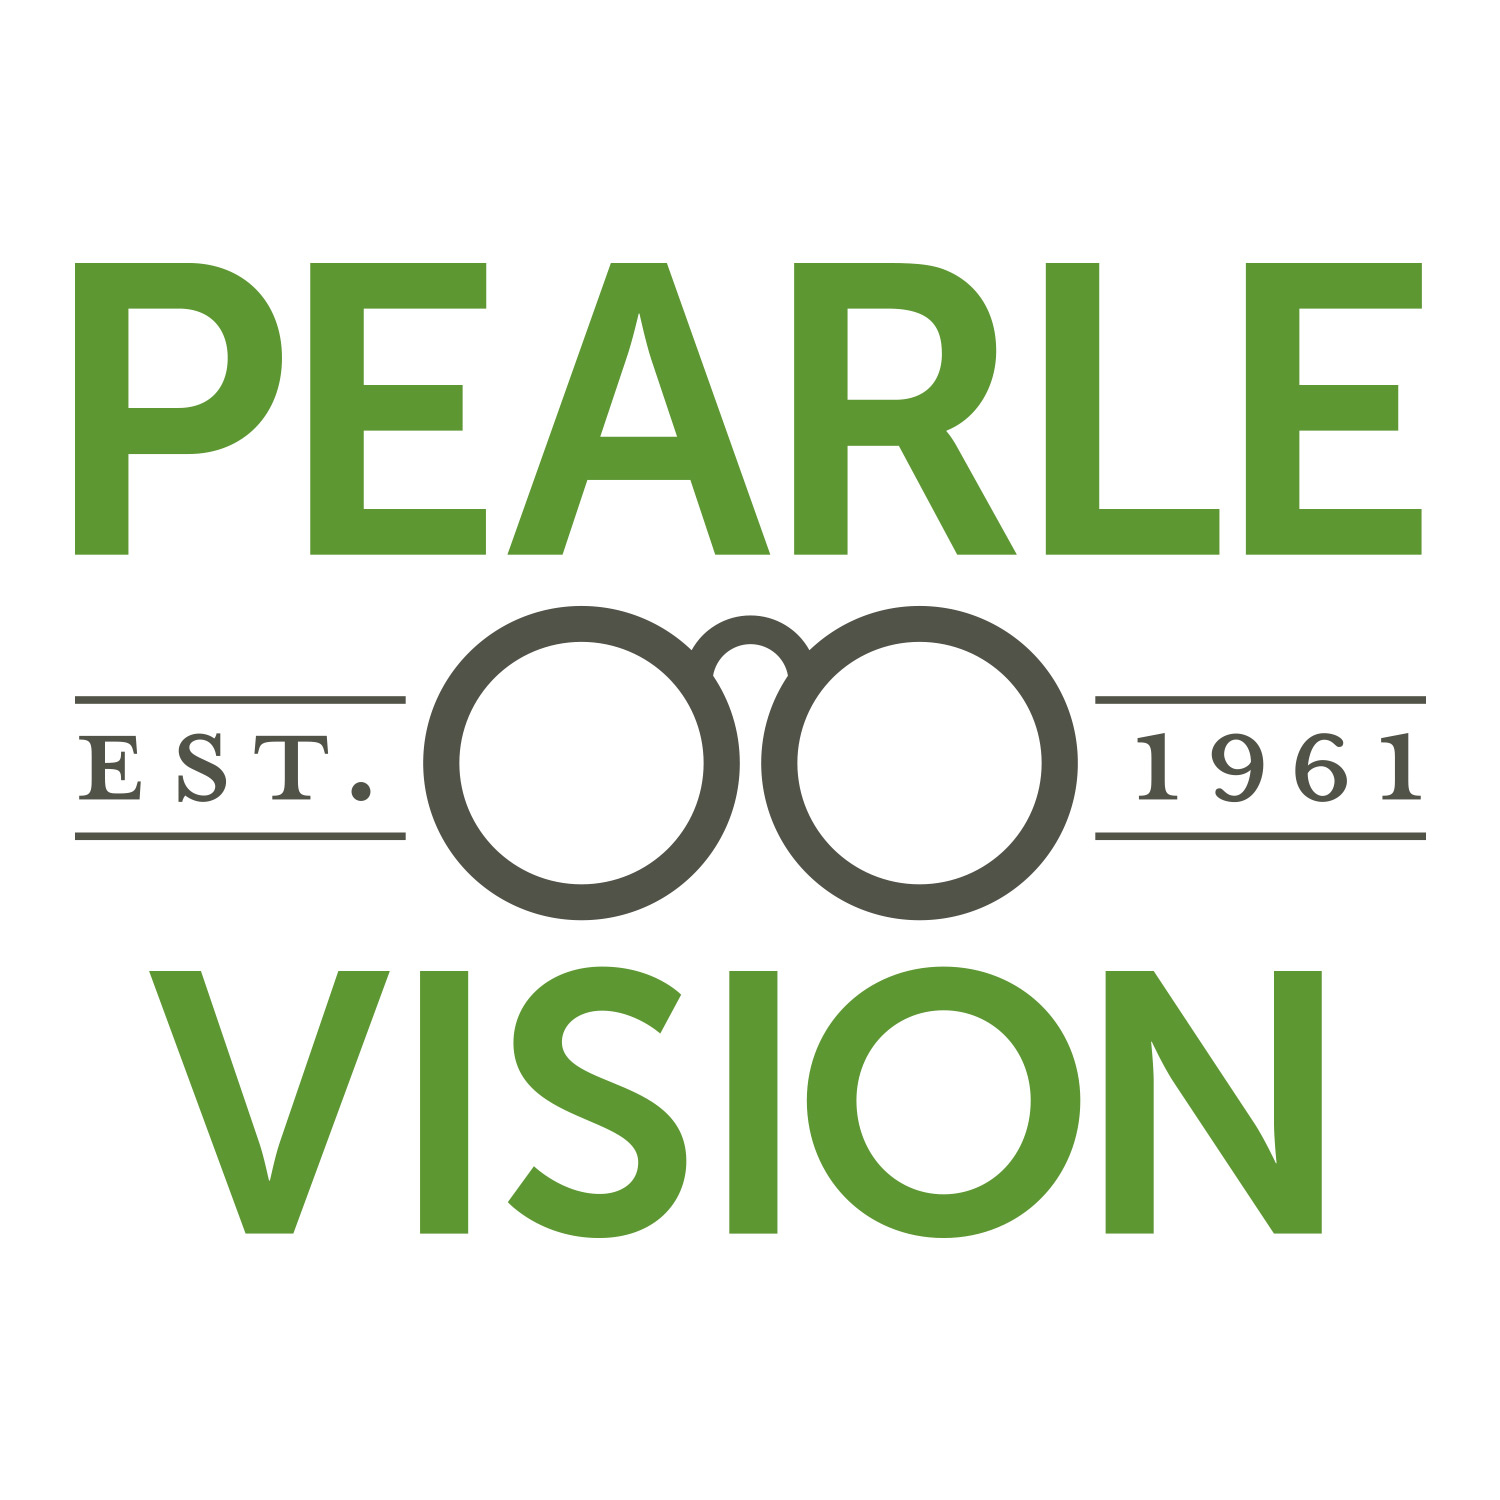 Pearle Vision Logo photo - 1